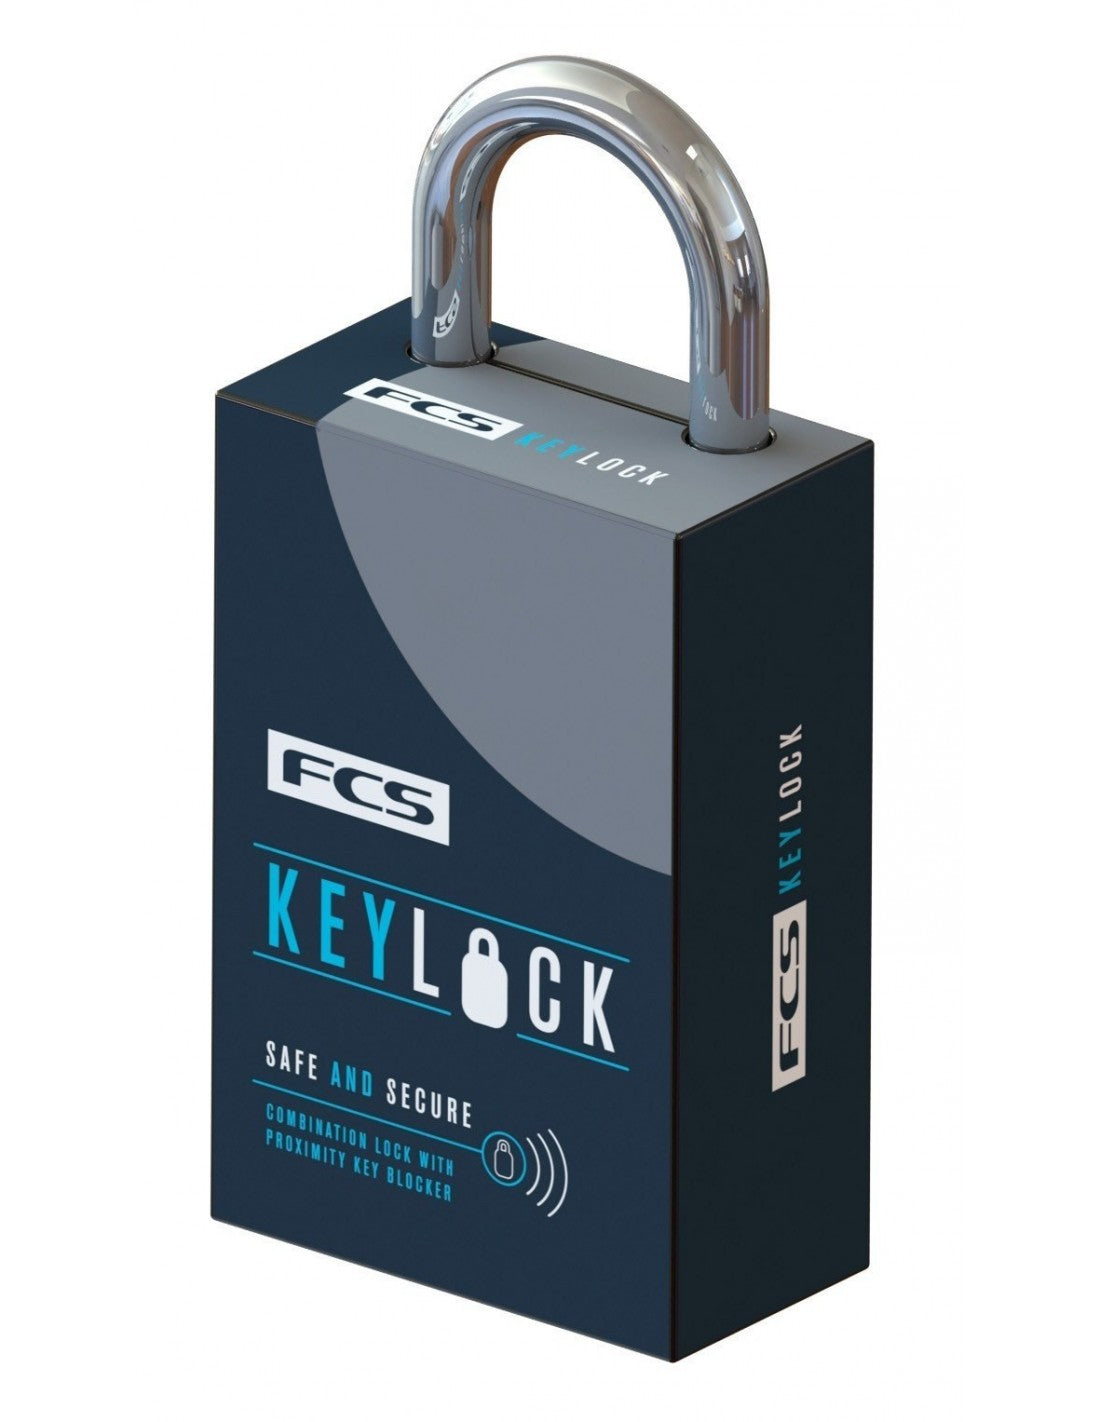 Keylock FCS